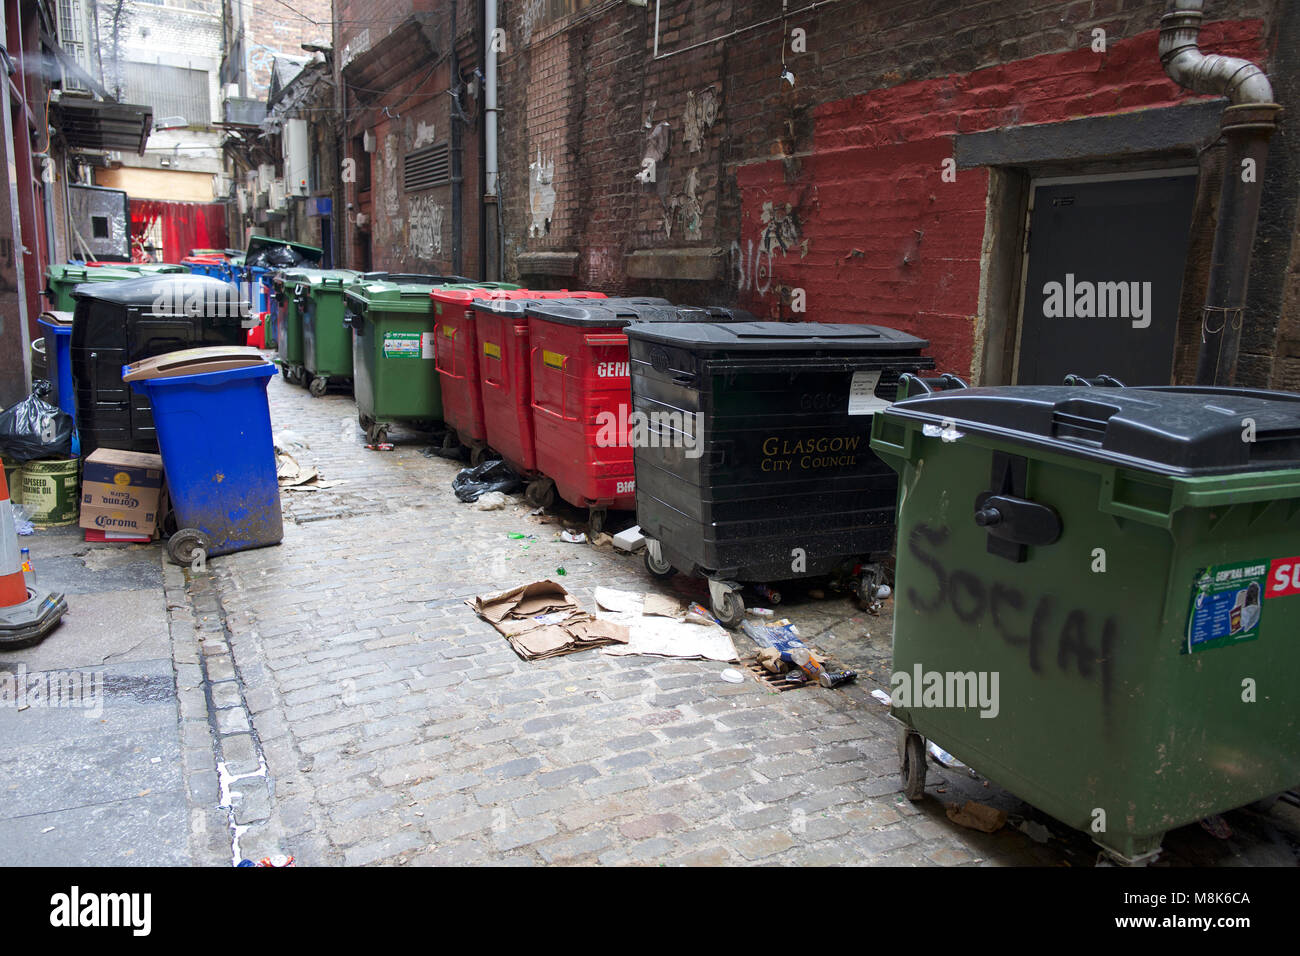 dumpsters-in-alley-uk-M8K6CA.jpg